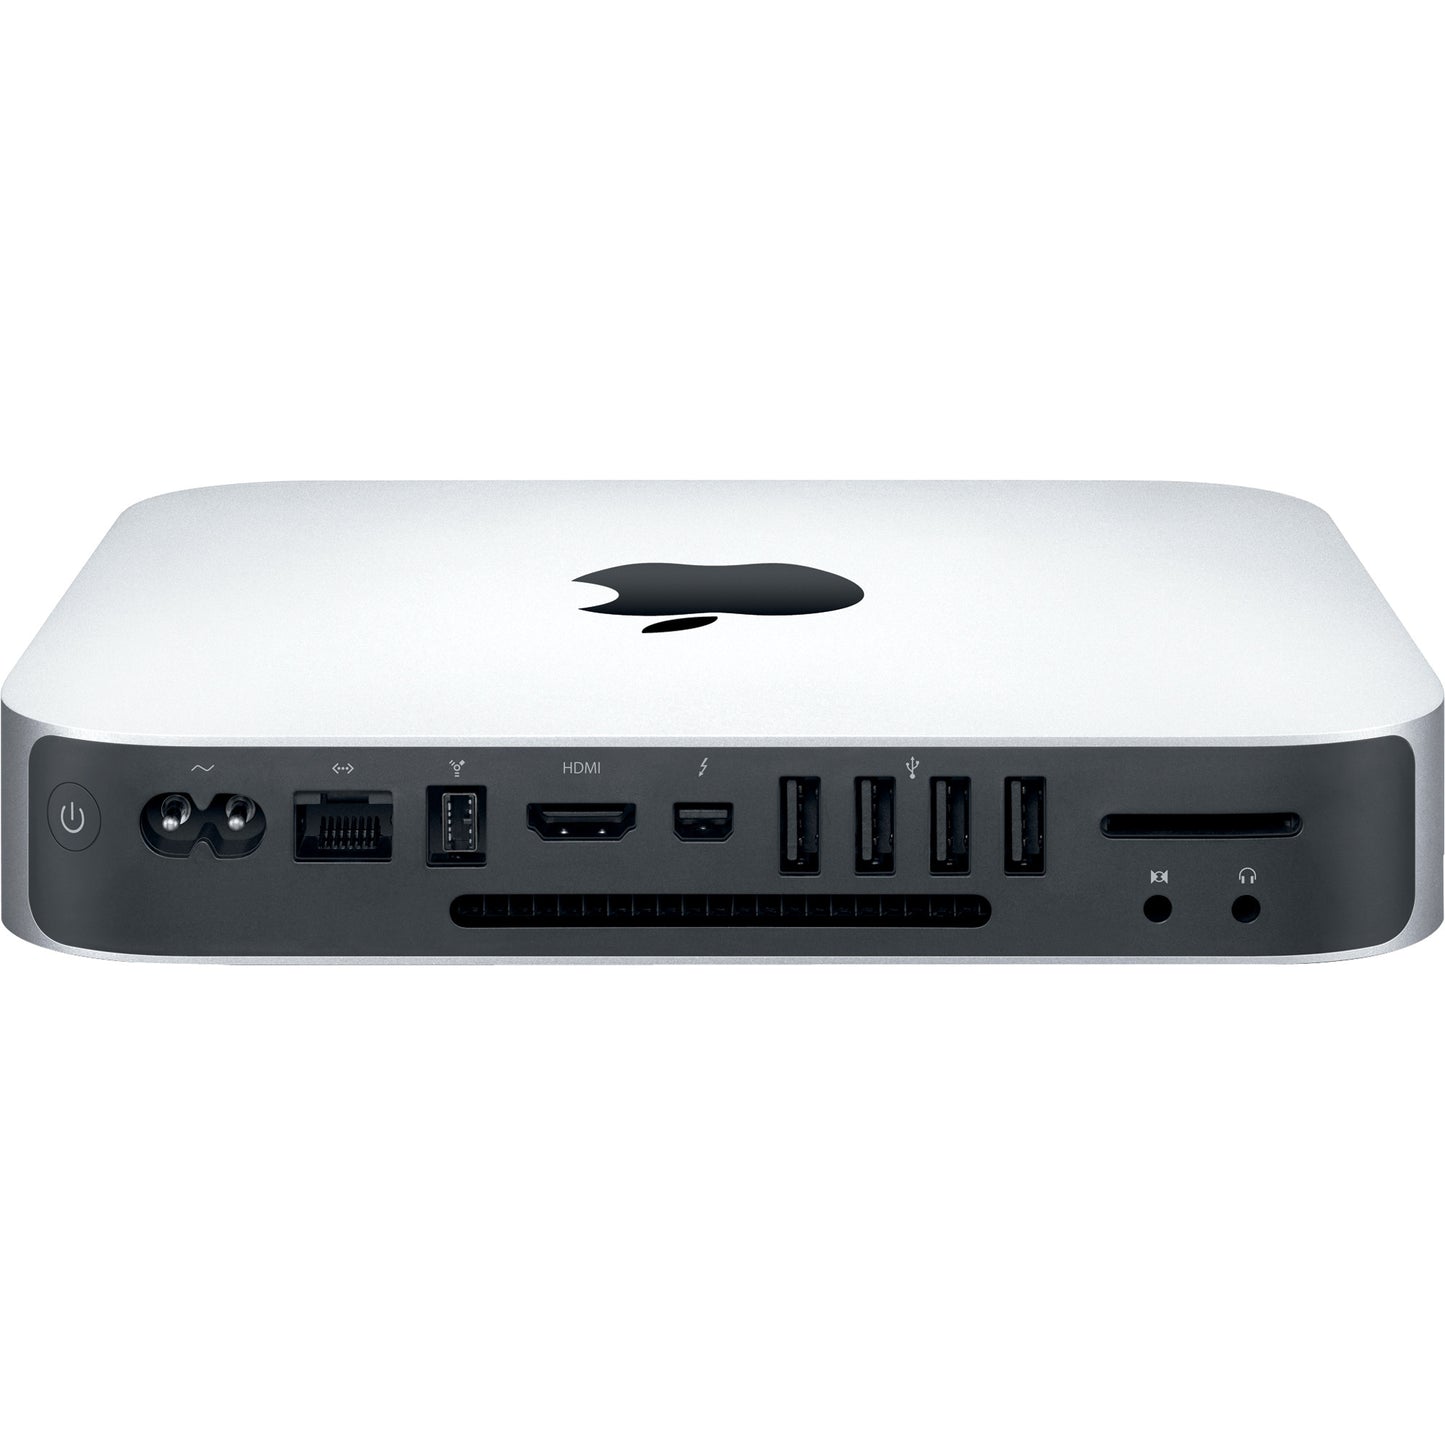 Apple Mac mini MD387LL/A Desktop Computer - Intel Core i5 2.50 GHz - Silver